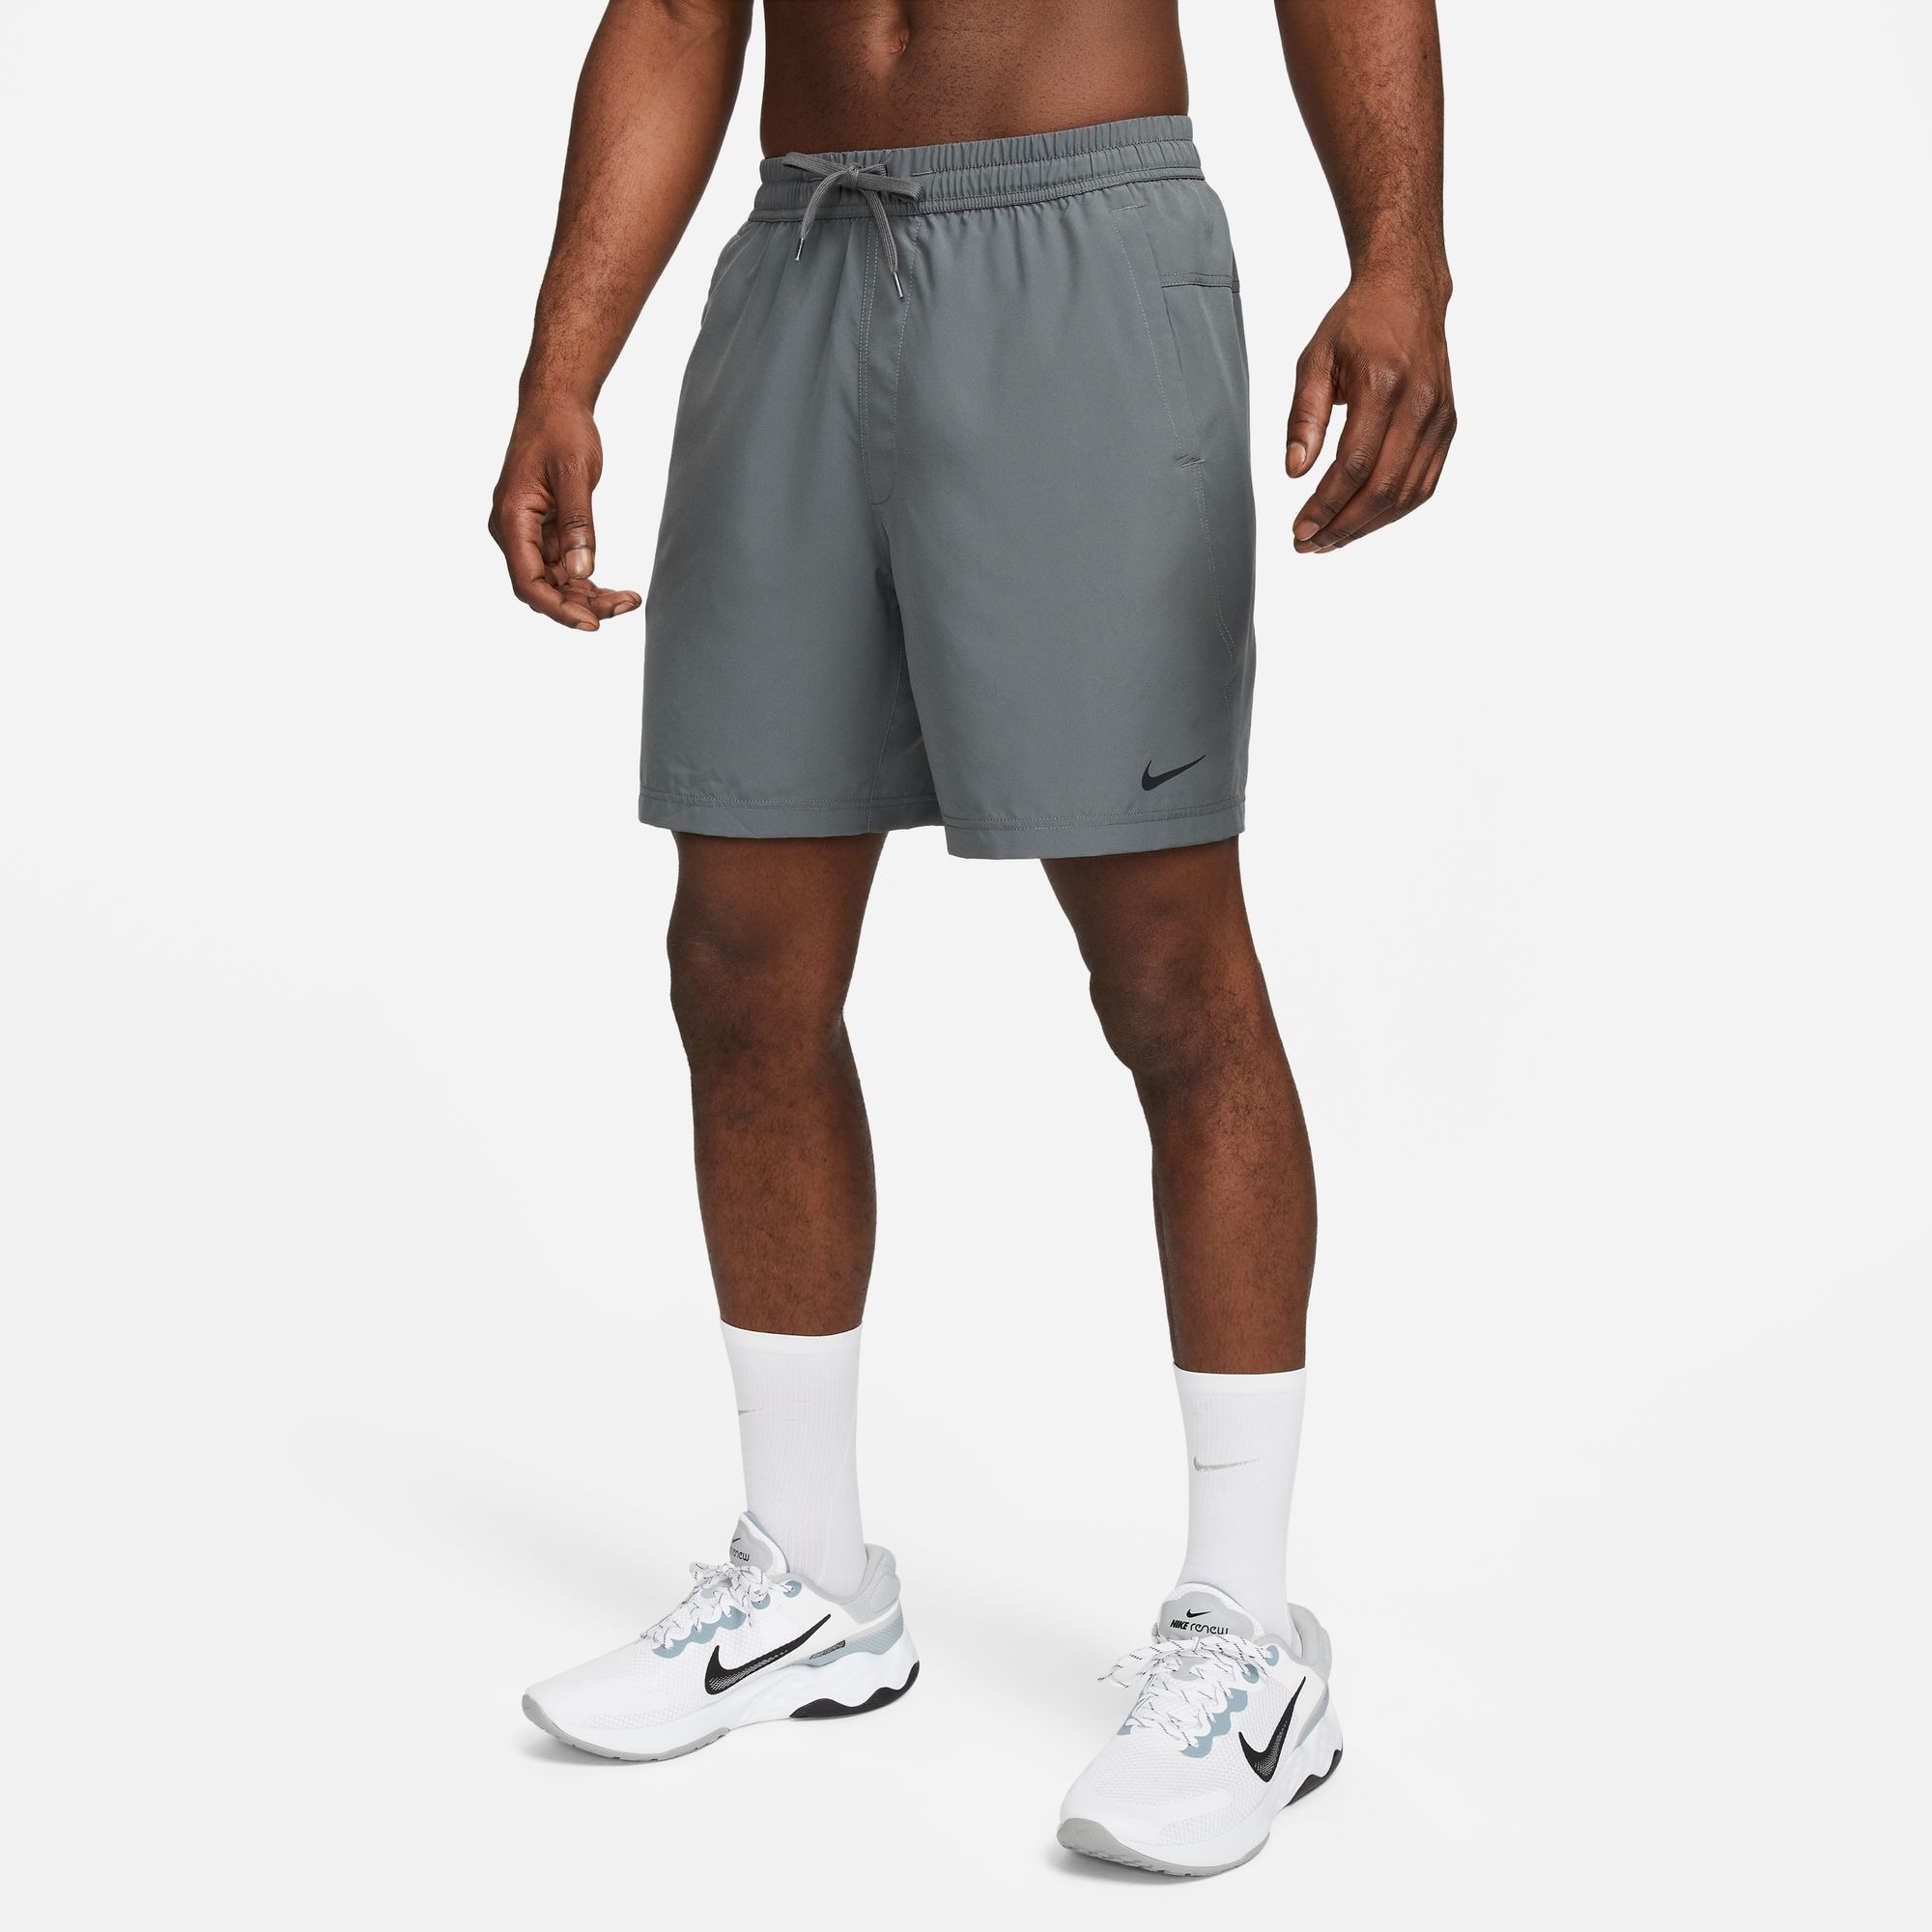 Nike Trainingsshorts »DRI-FIT FORM MEN'S UNLINED VERSATILE SHORTS«